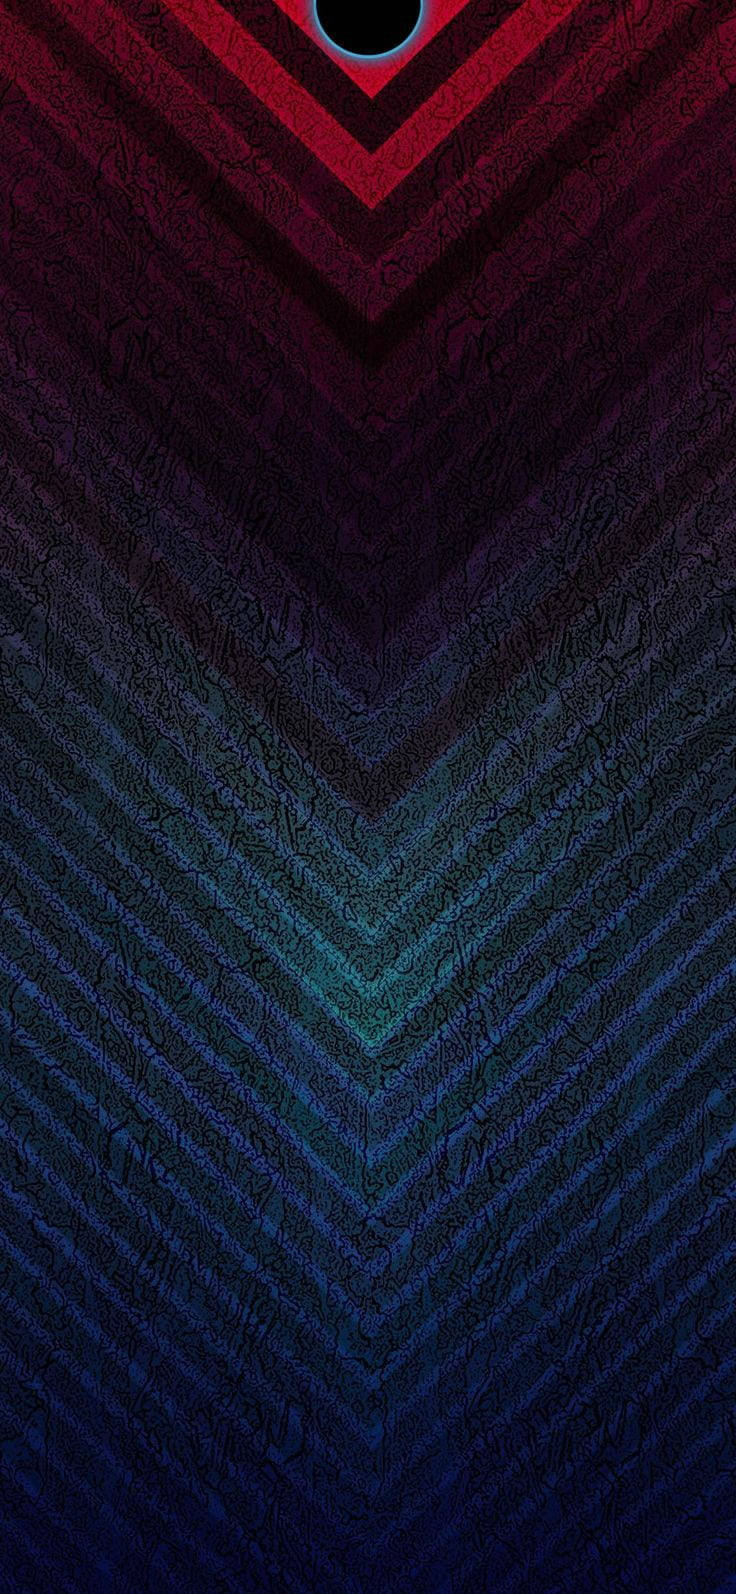 Dot Notch Inverted Triangle Patterns Wallpaper